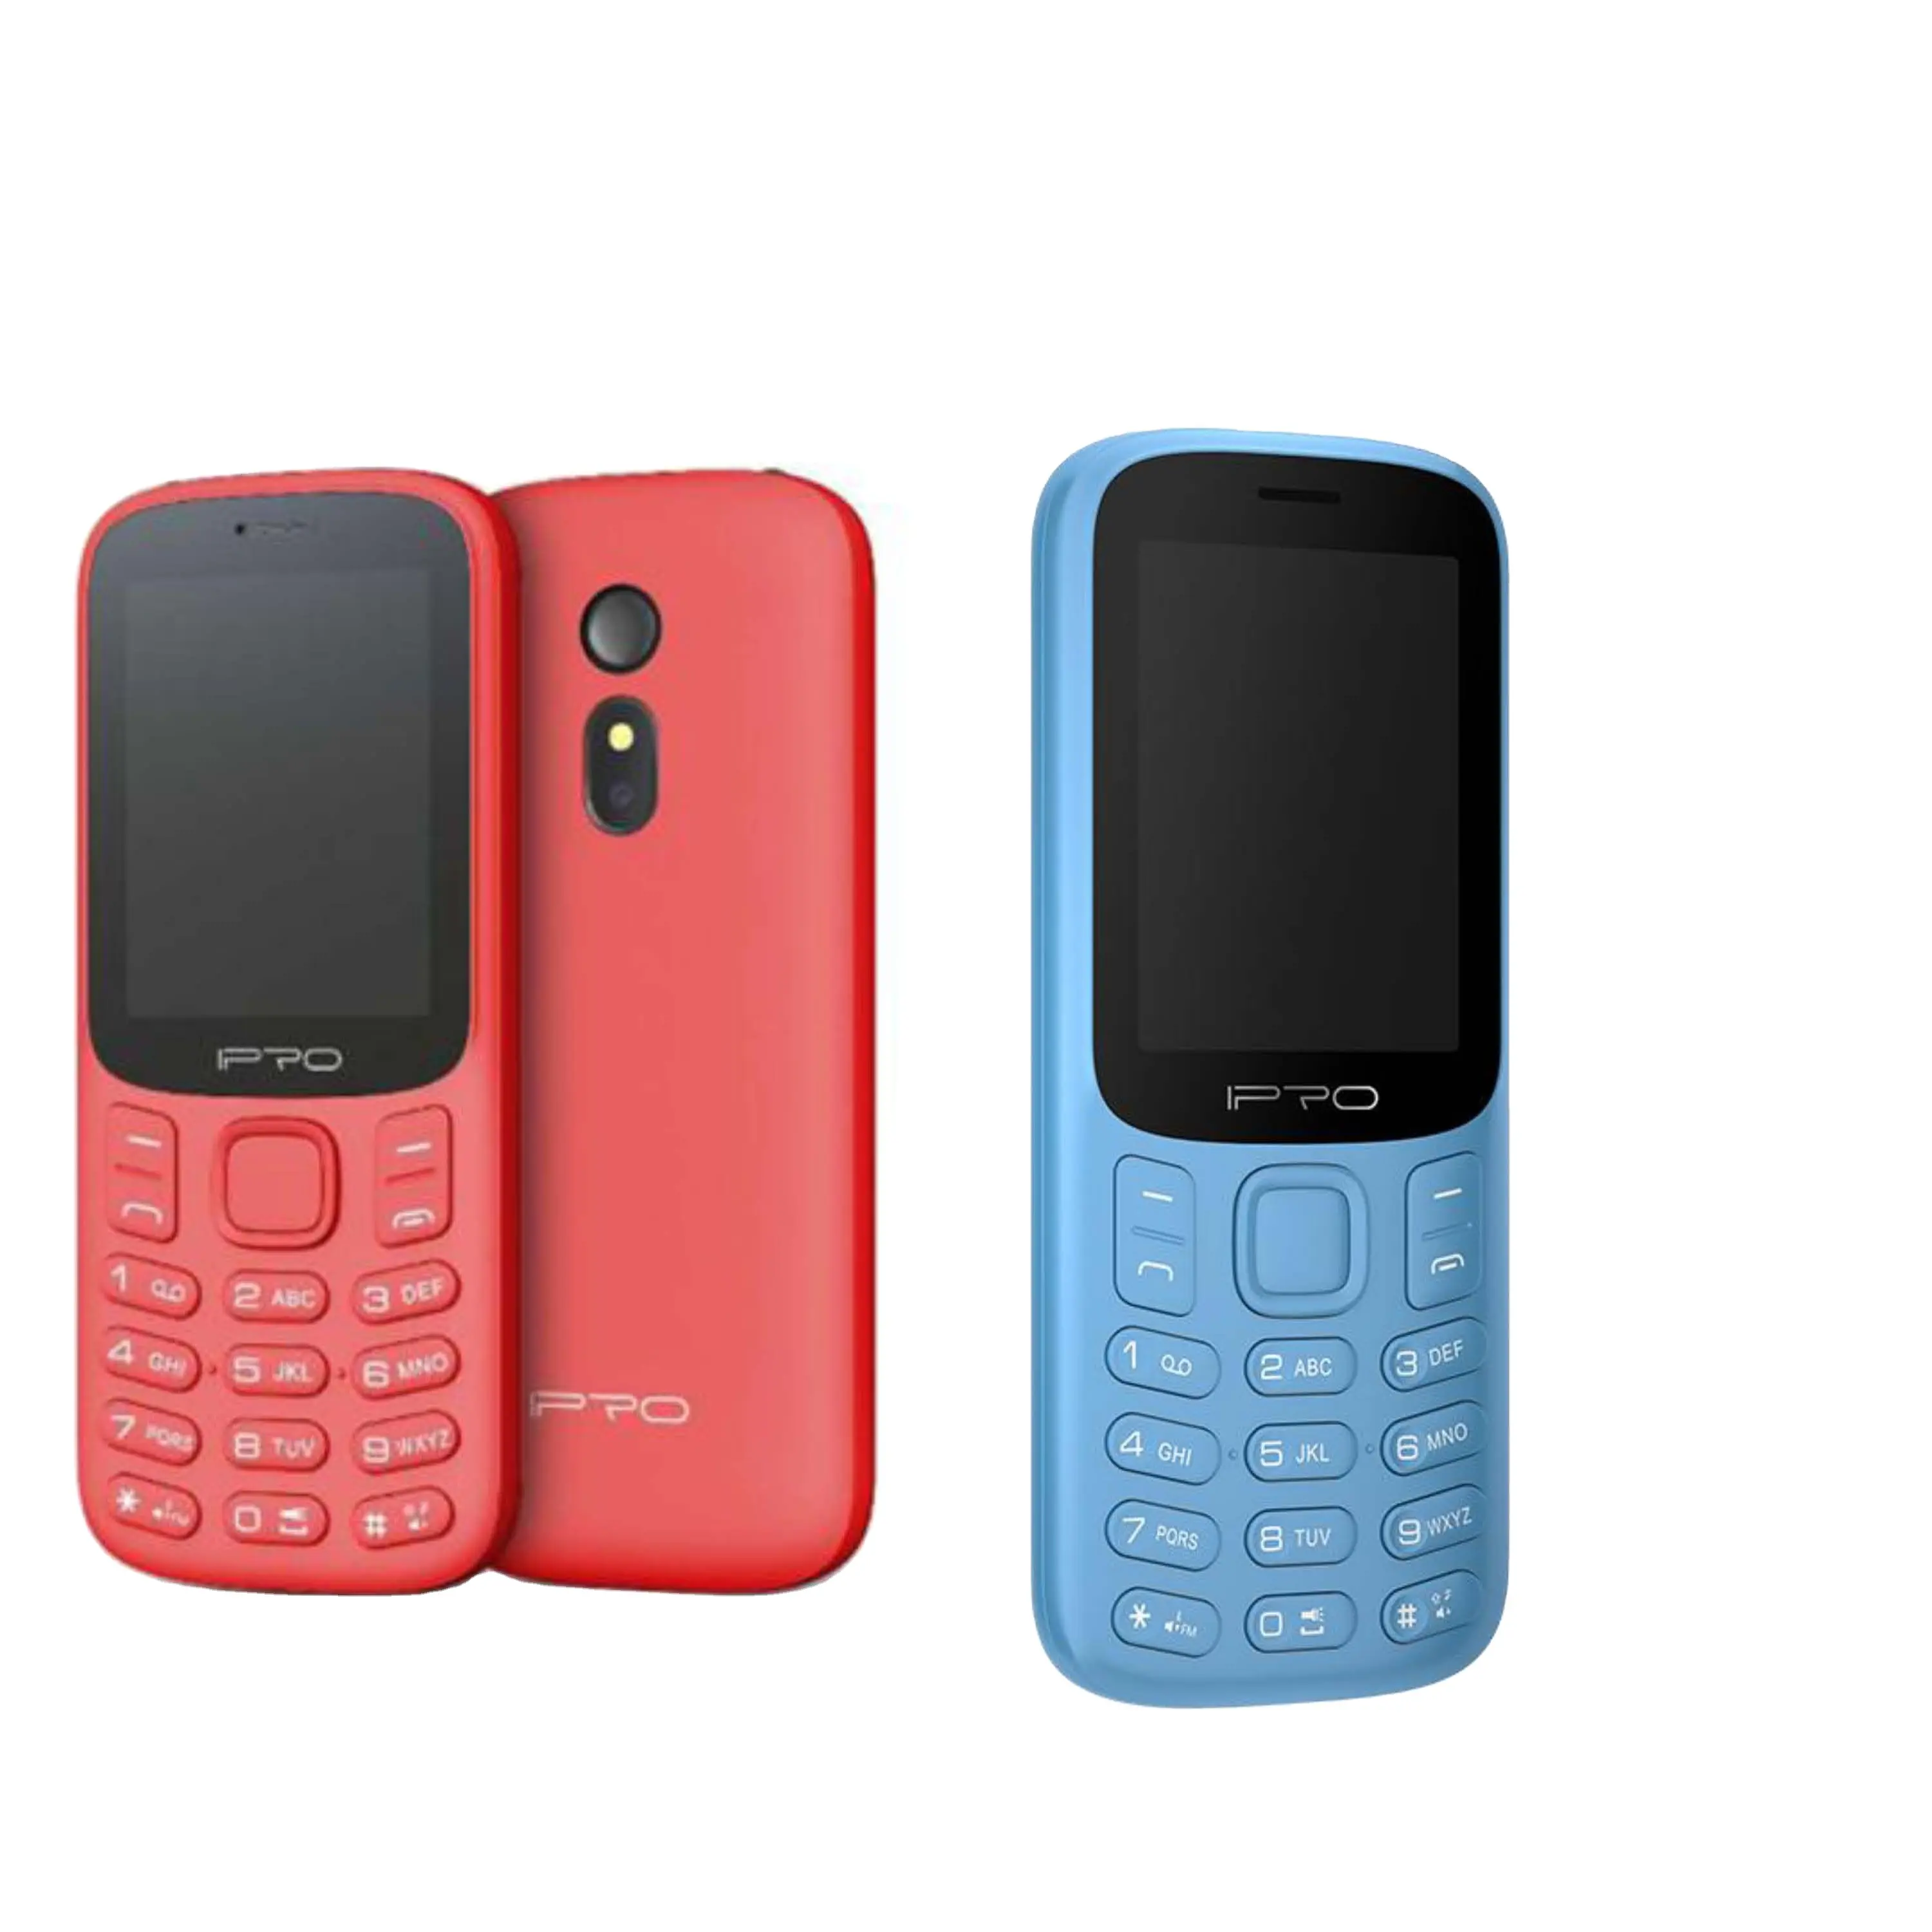 Teléfono original de función de tarjeta SIM dual, modo de espera dual, miniteléfono con función Mini, teléfono móvil 2G